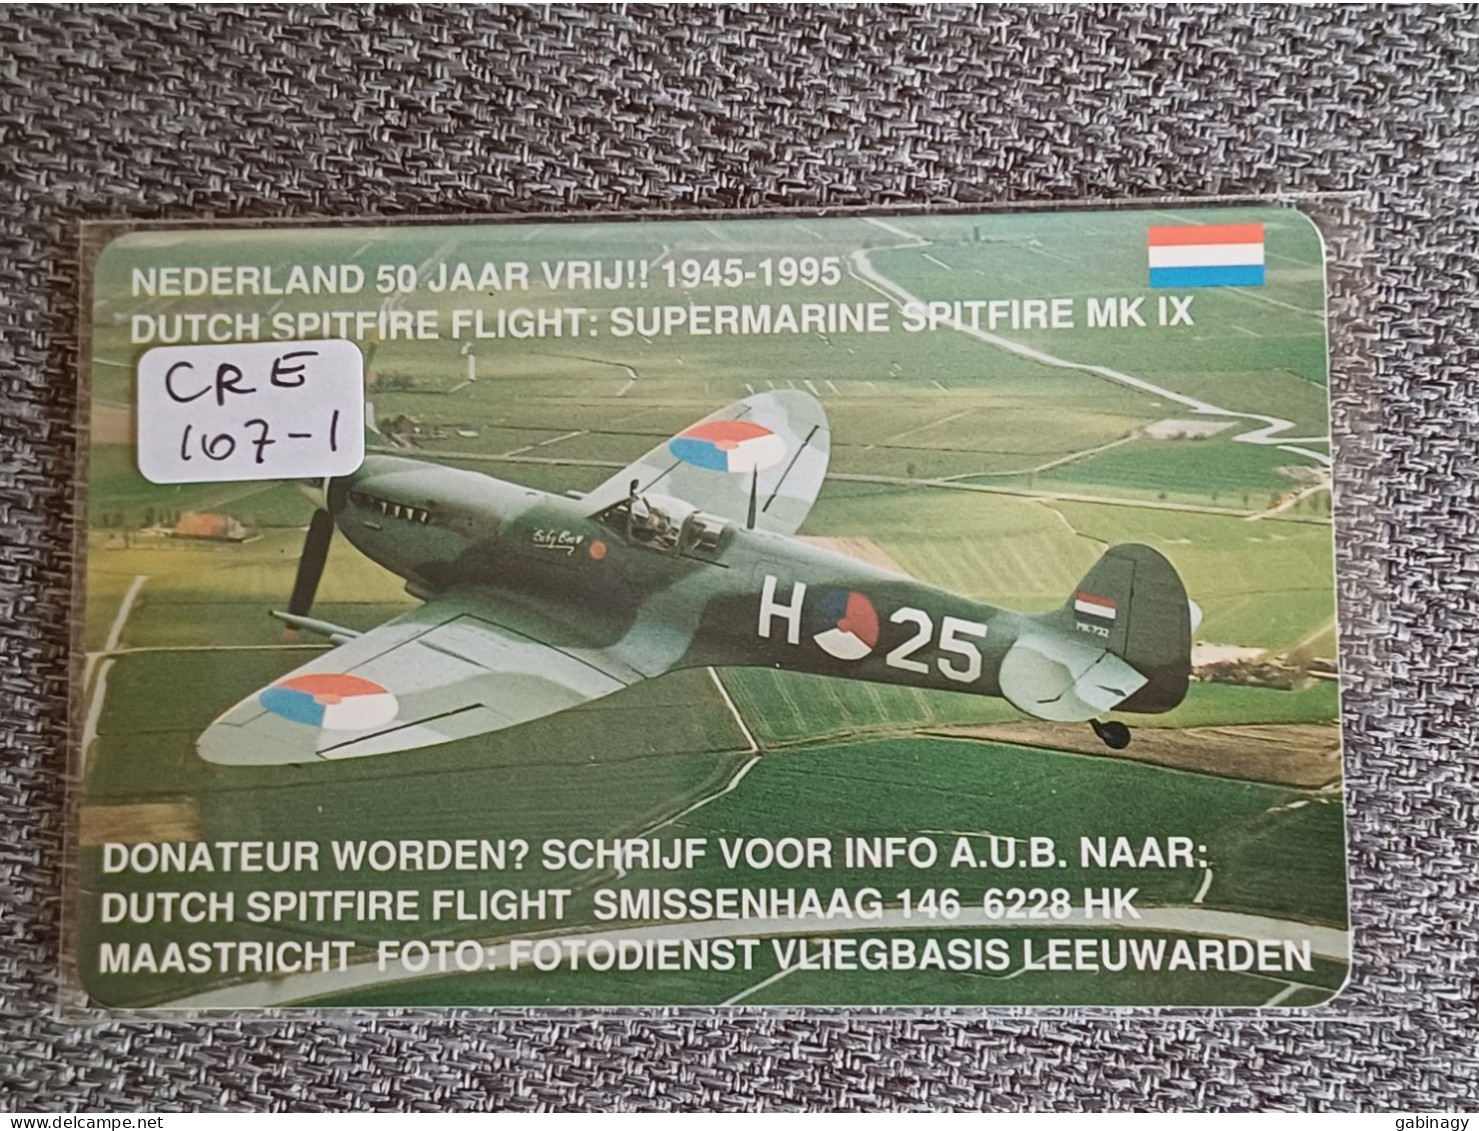 NETHERLANDS - CRE107-1 - AIRPLANE - DUTCH SPITFIRE - 1.000 EX. - Private